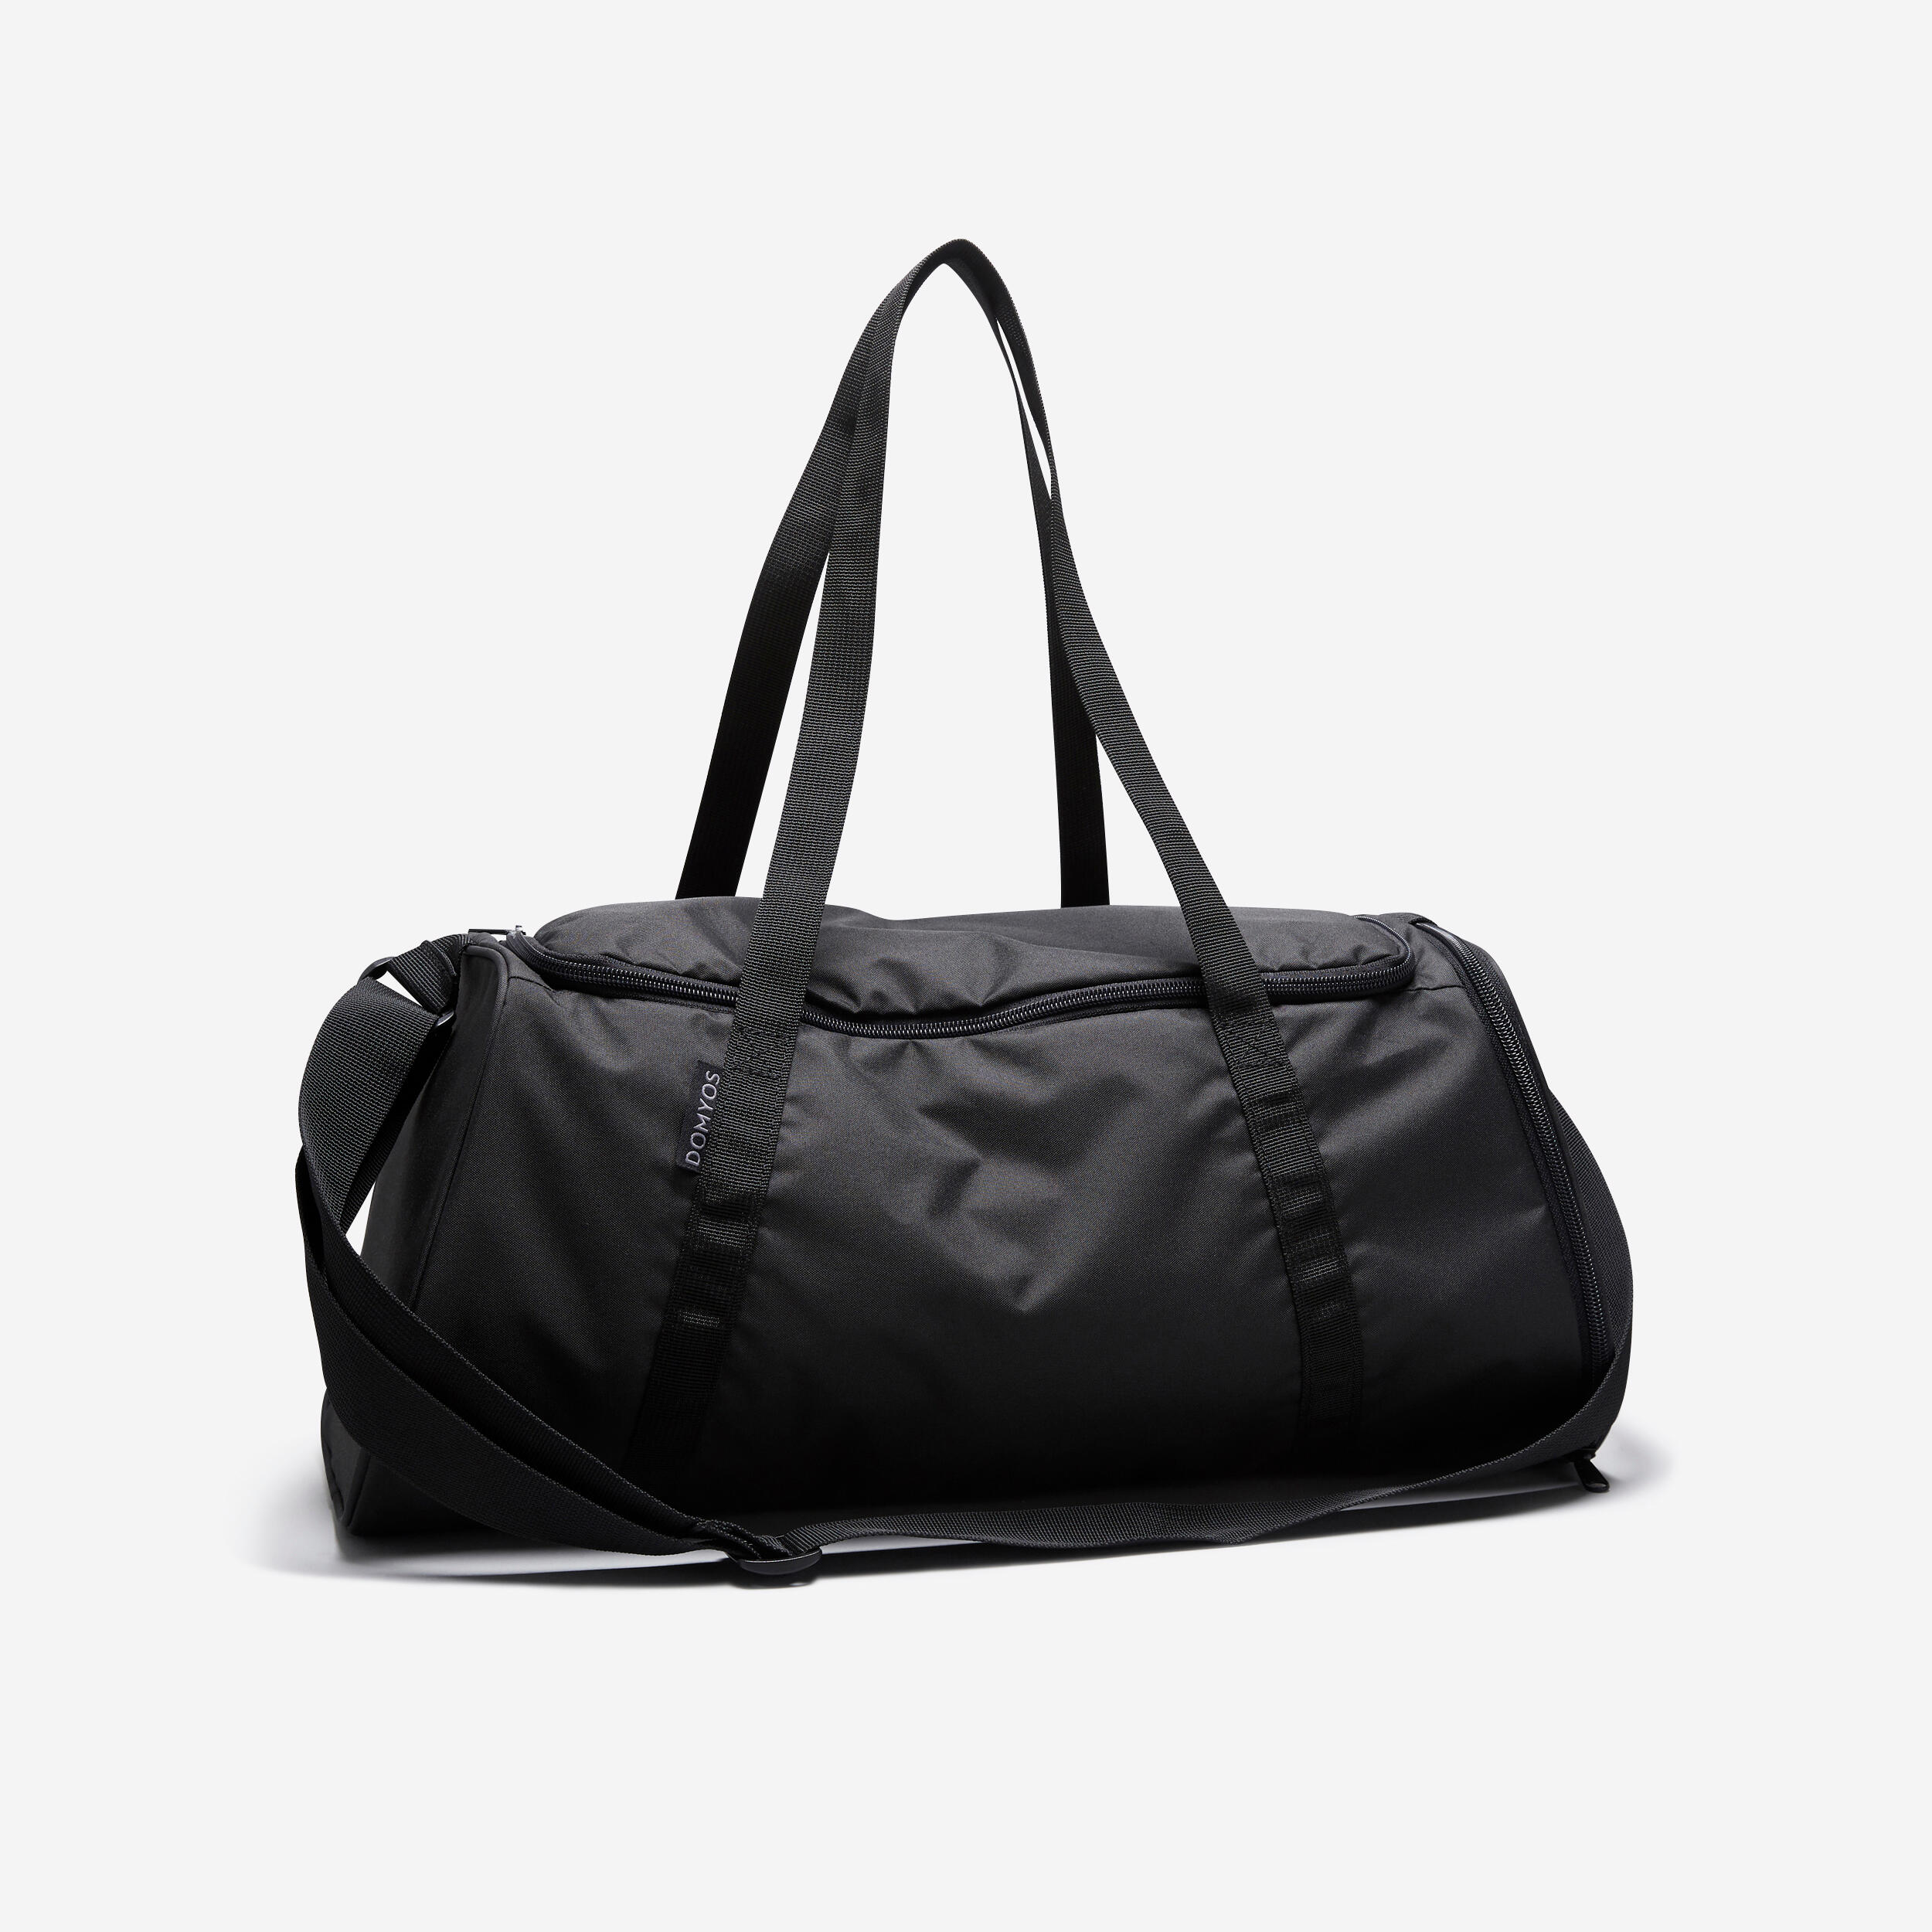 Buy Black Travel Bags for Men by Urban Tribe Online  Ajiocom